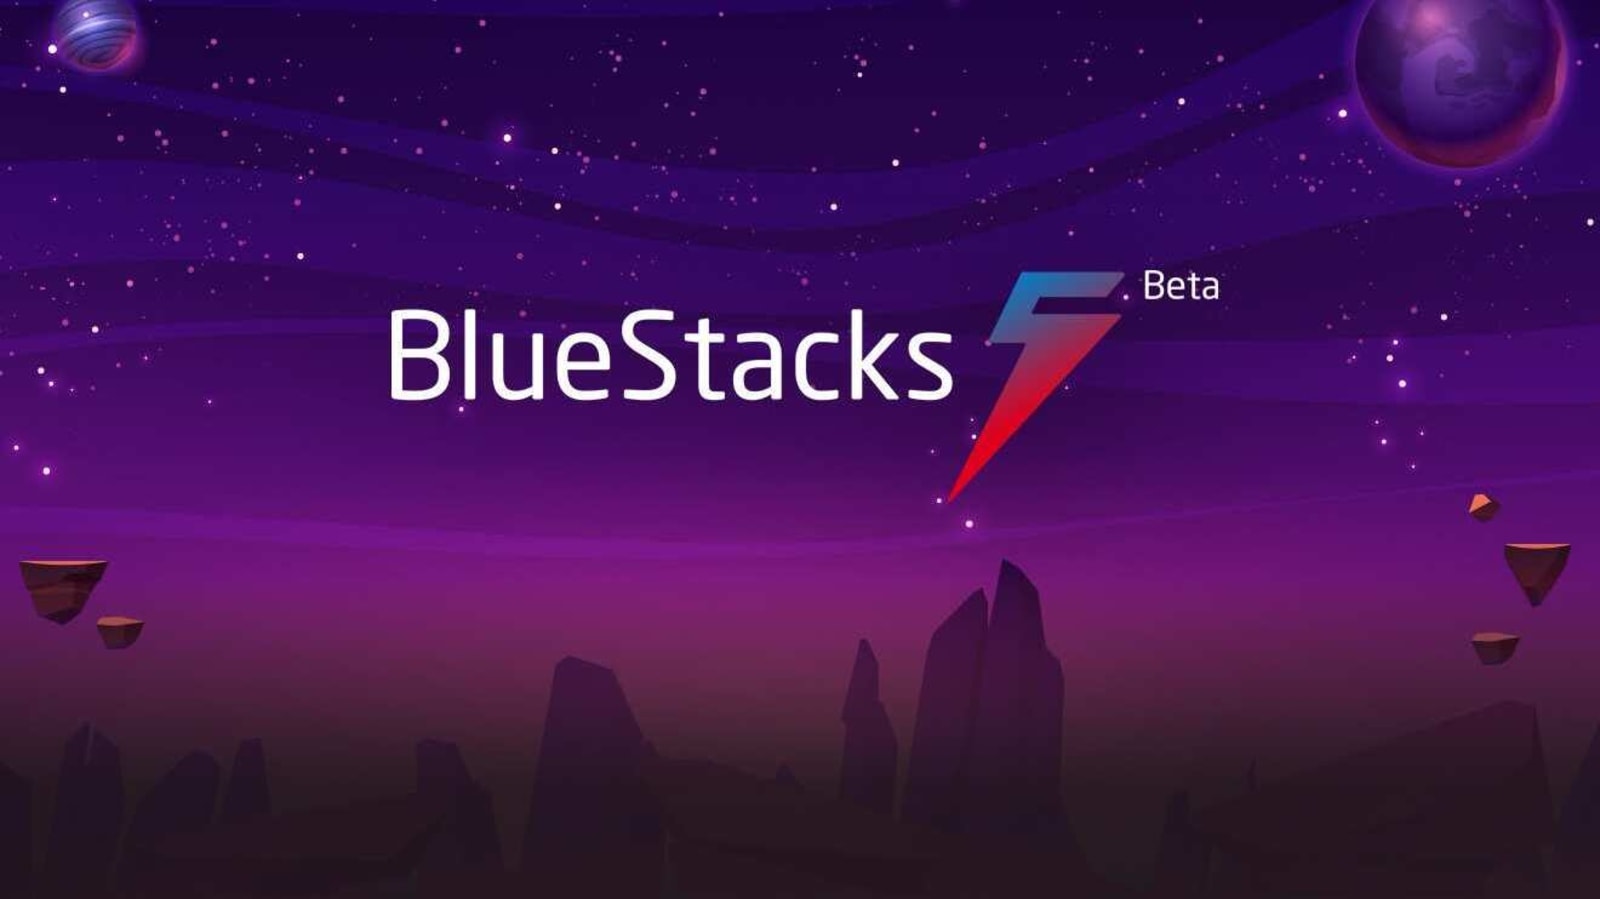 bluestacks latest version 5